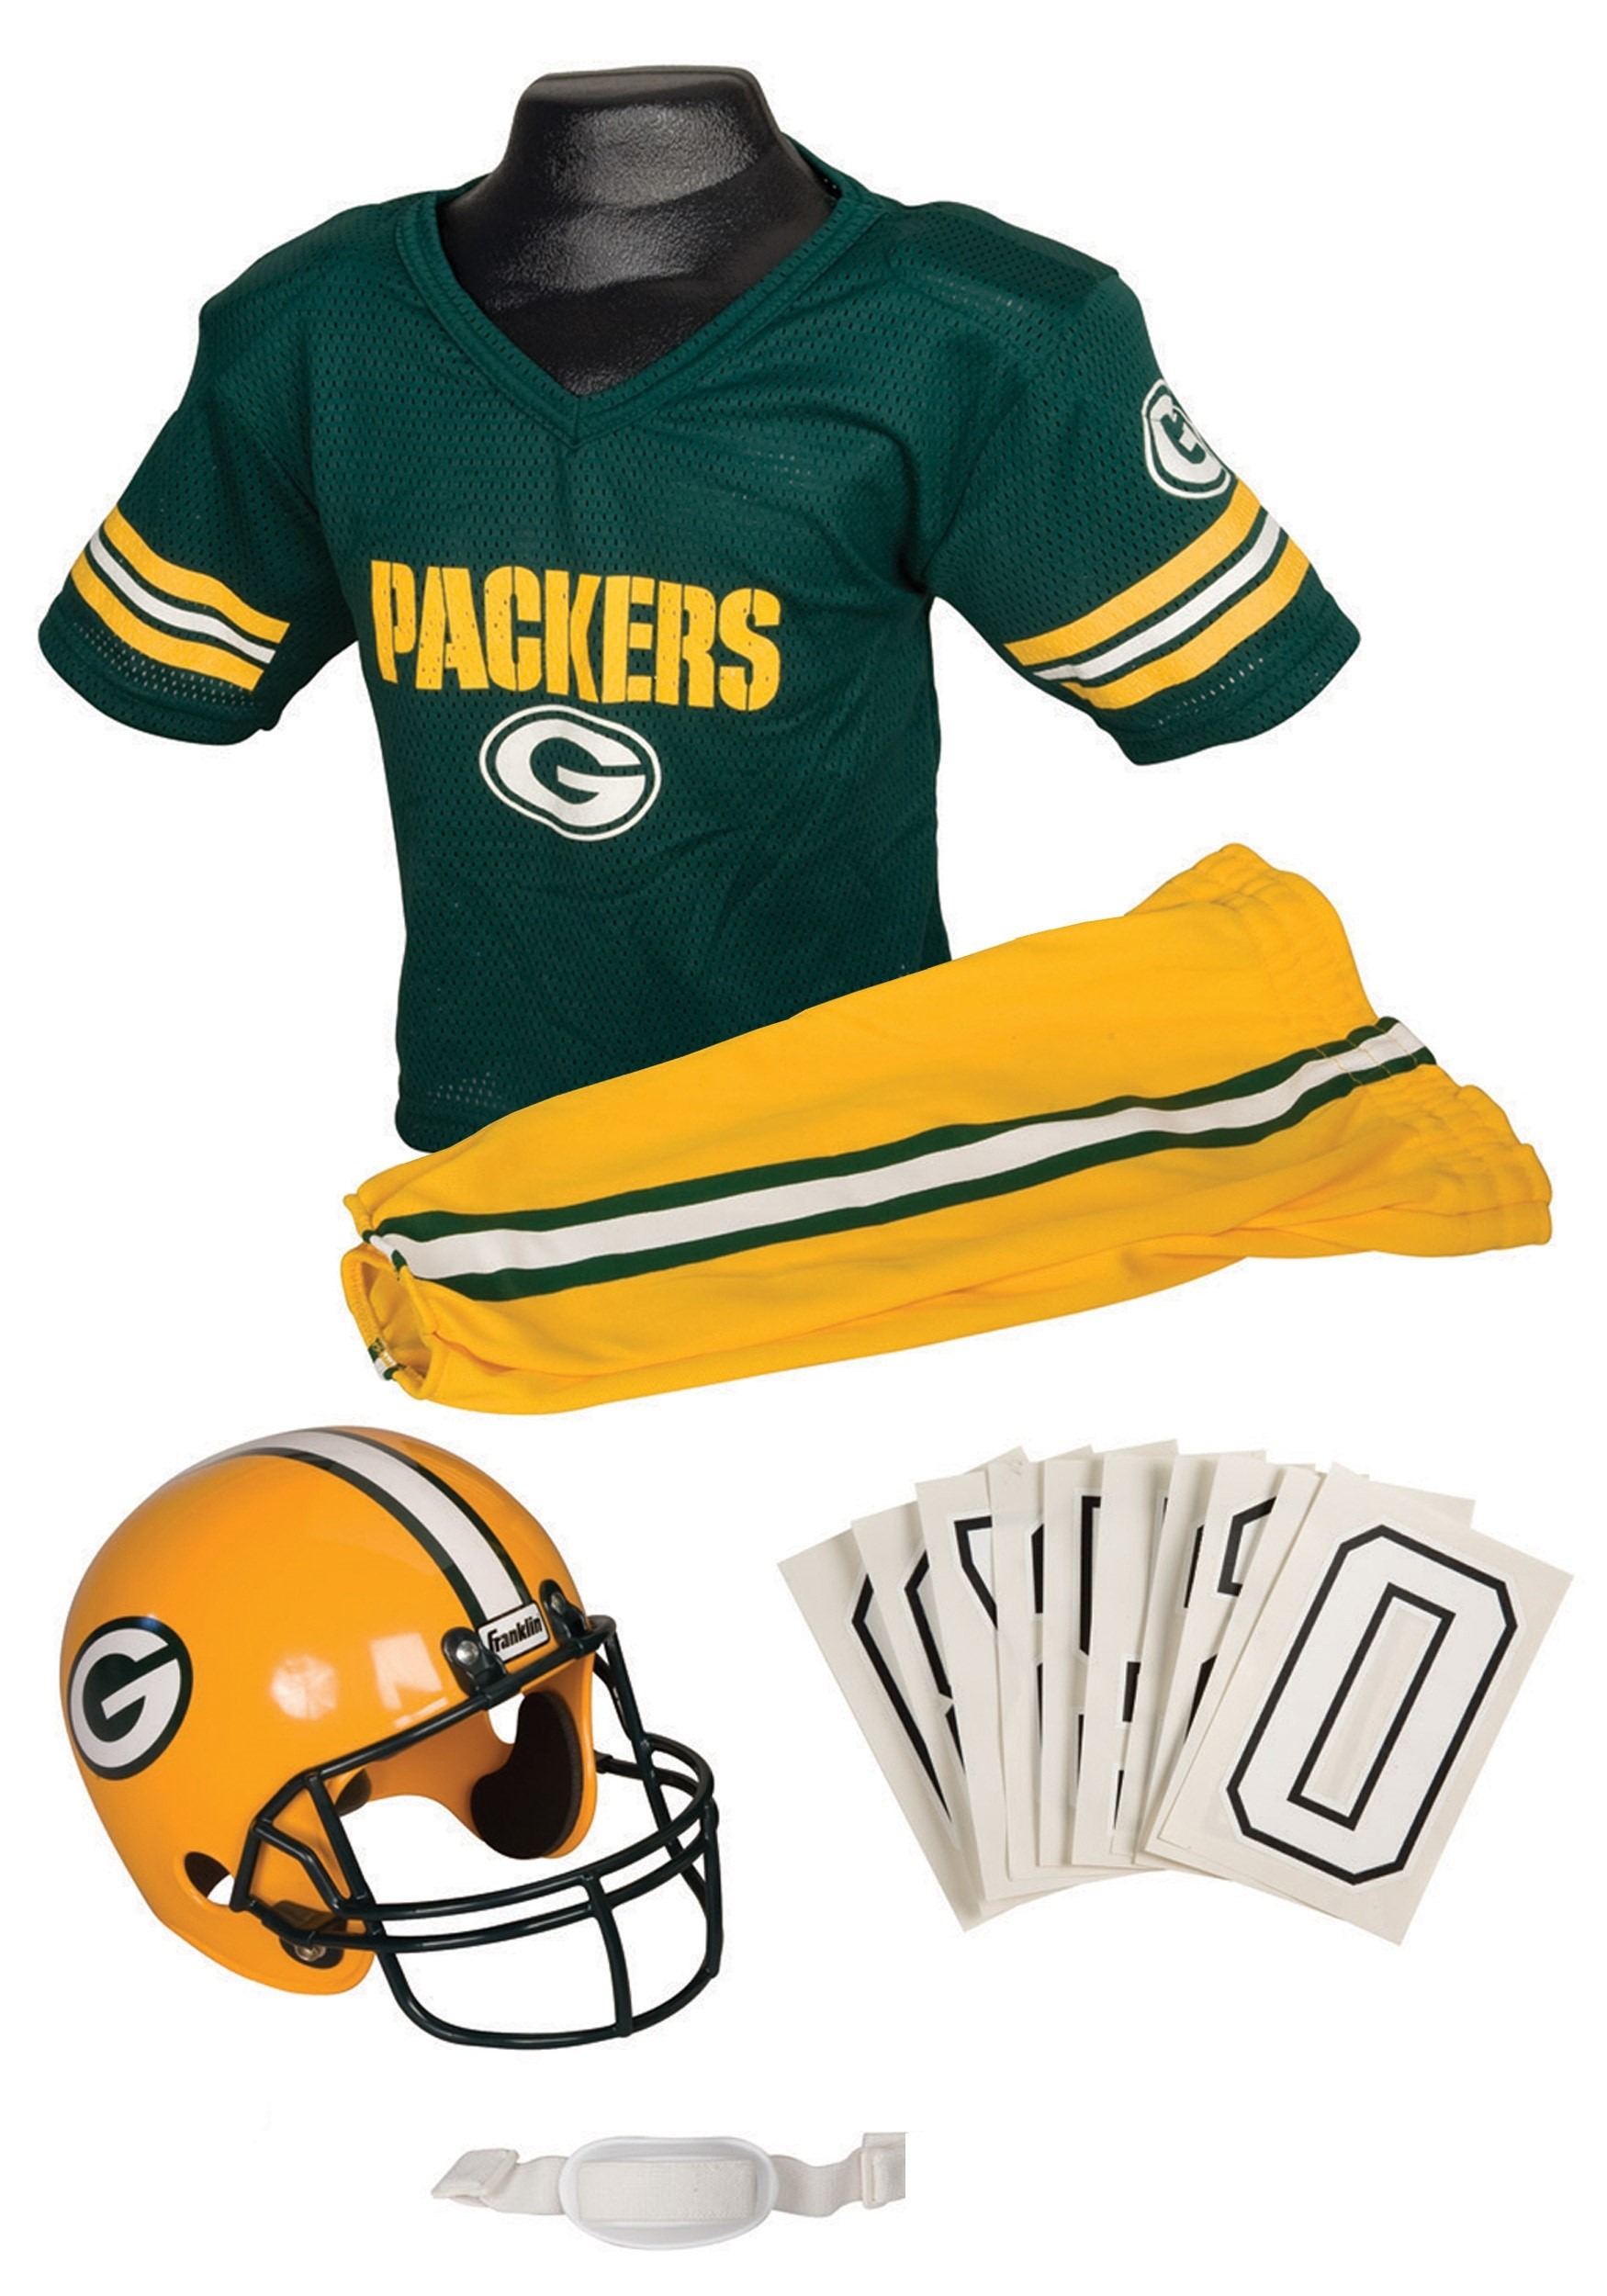 Image of Kid's NFL Green Bay Packers Uniform Costume ID FA15700F05-S